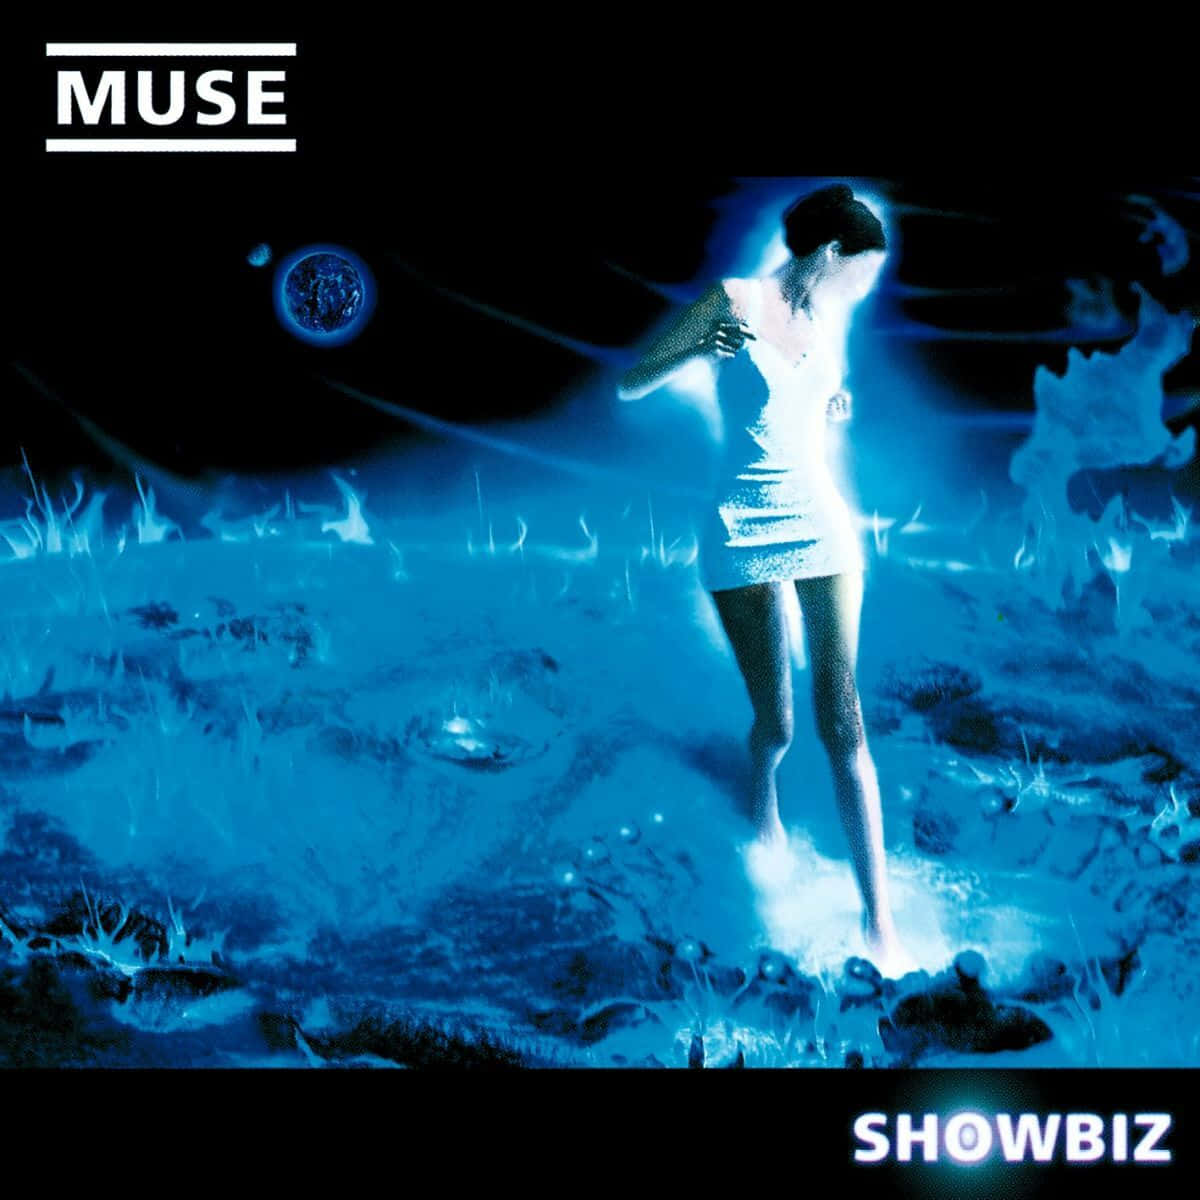 Muse Showbiz Album Cover Background